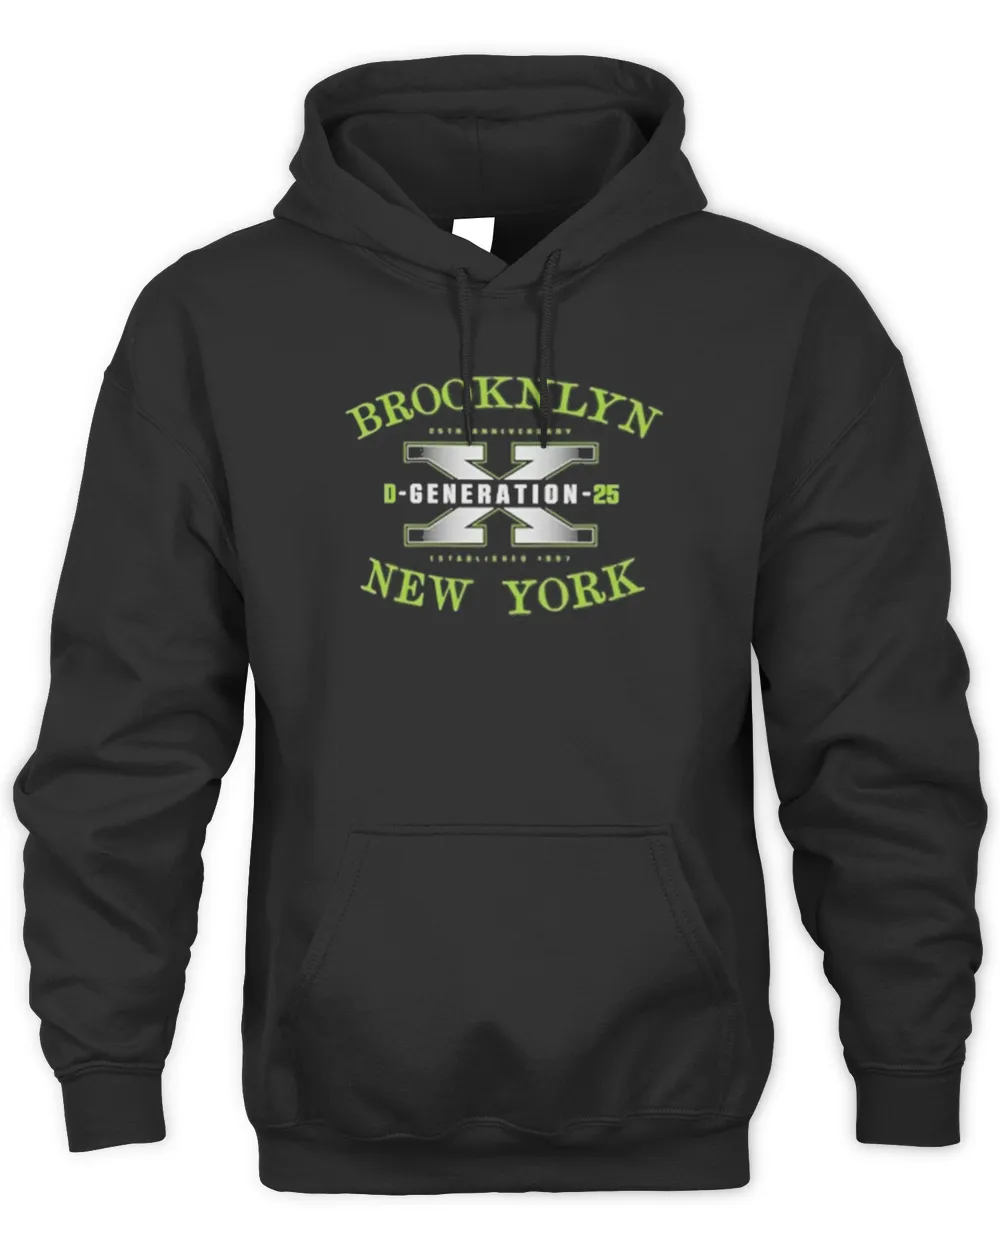 Brooknlyn D-Generation 25 New York shirt